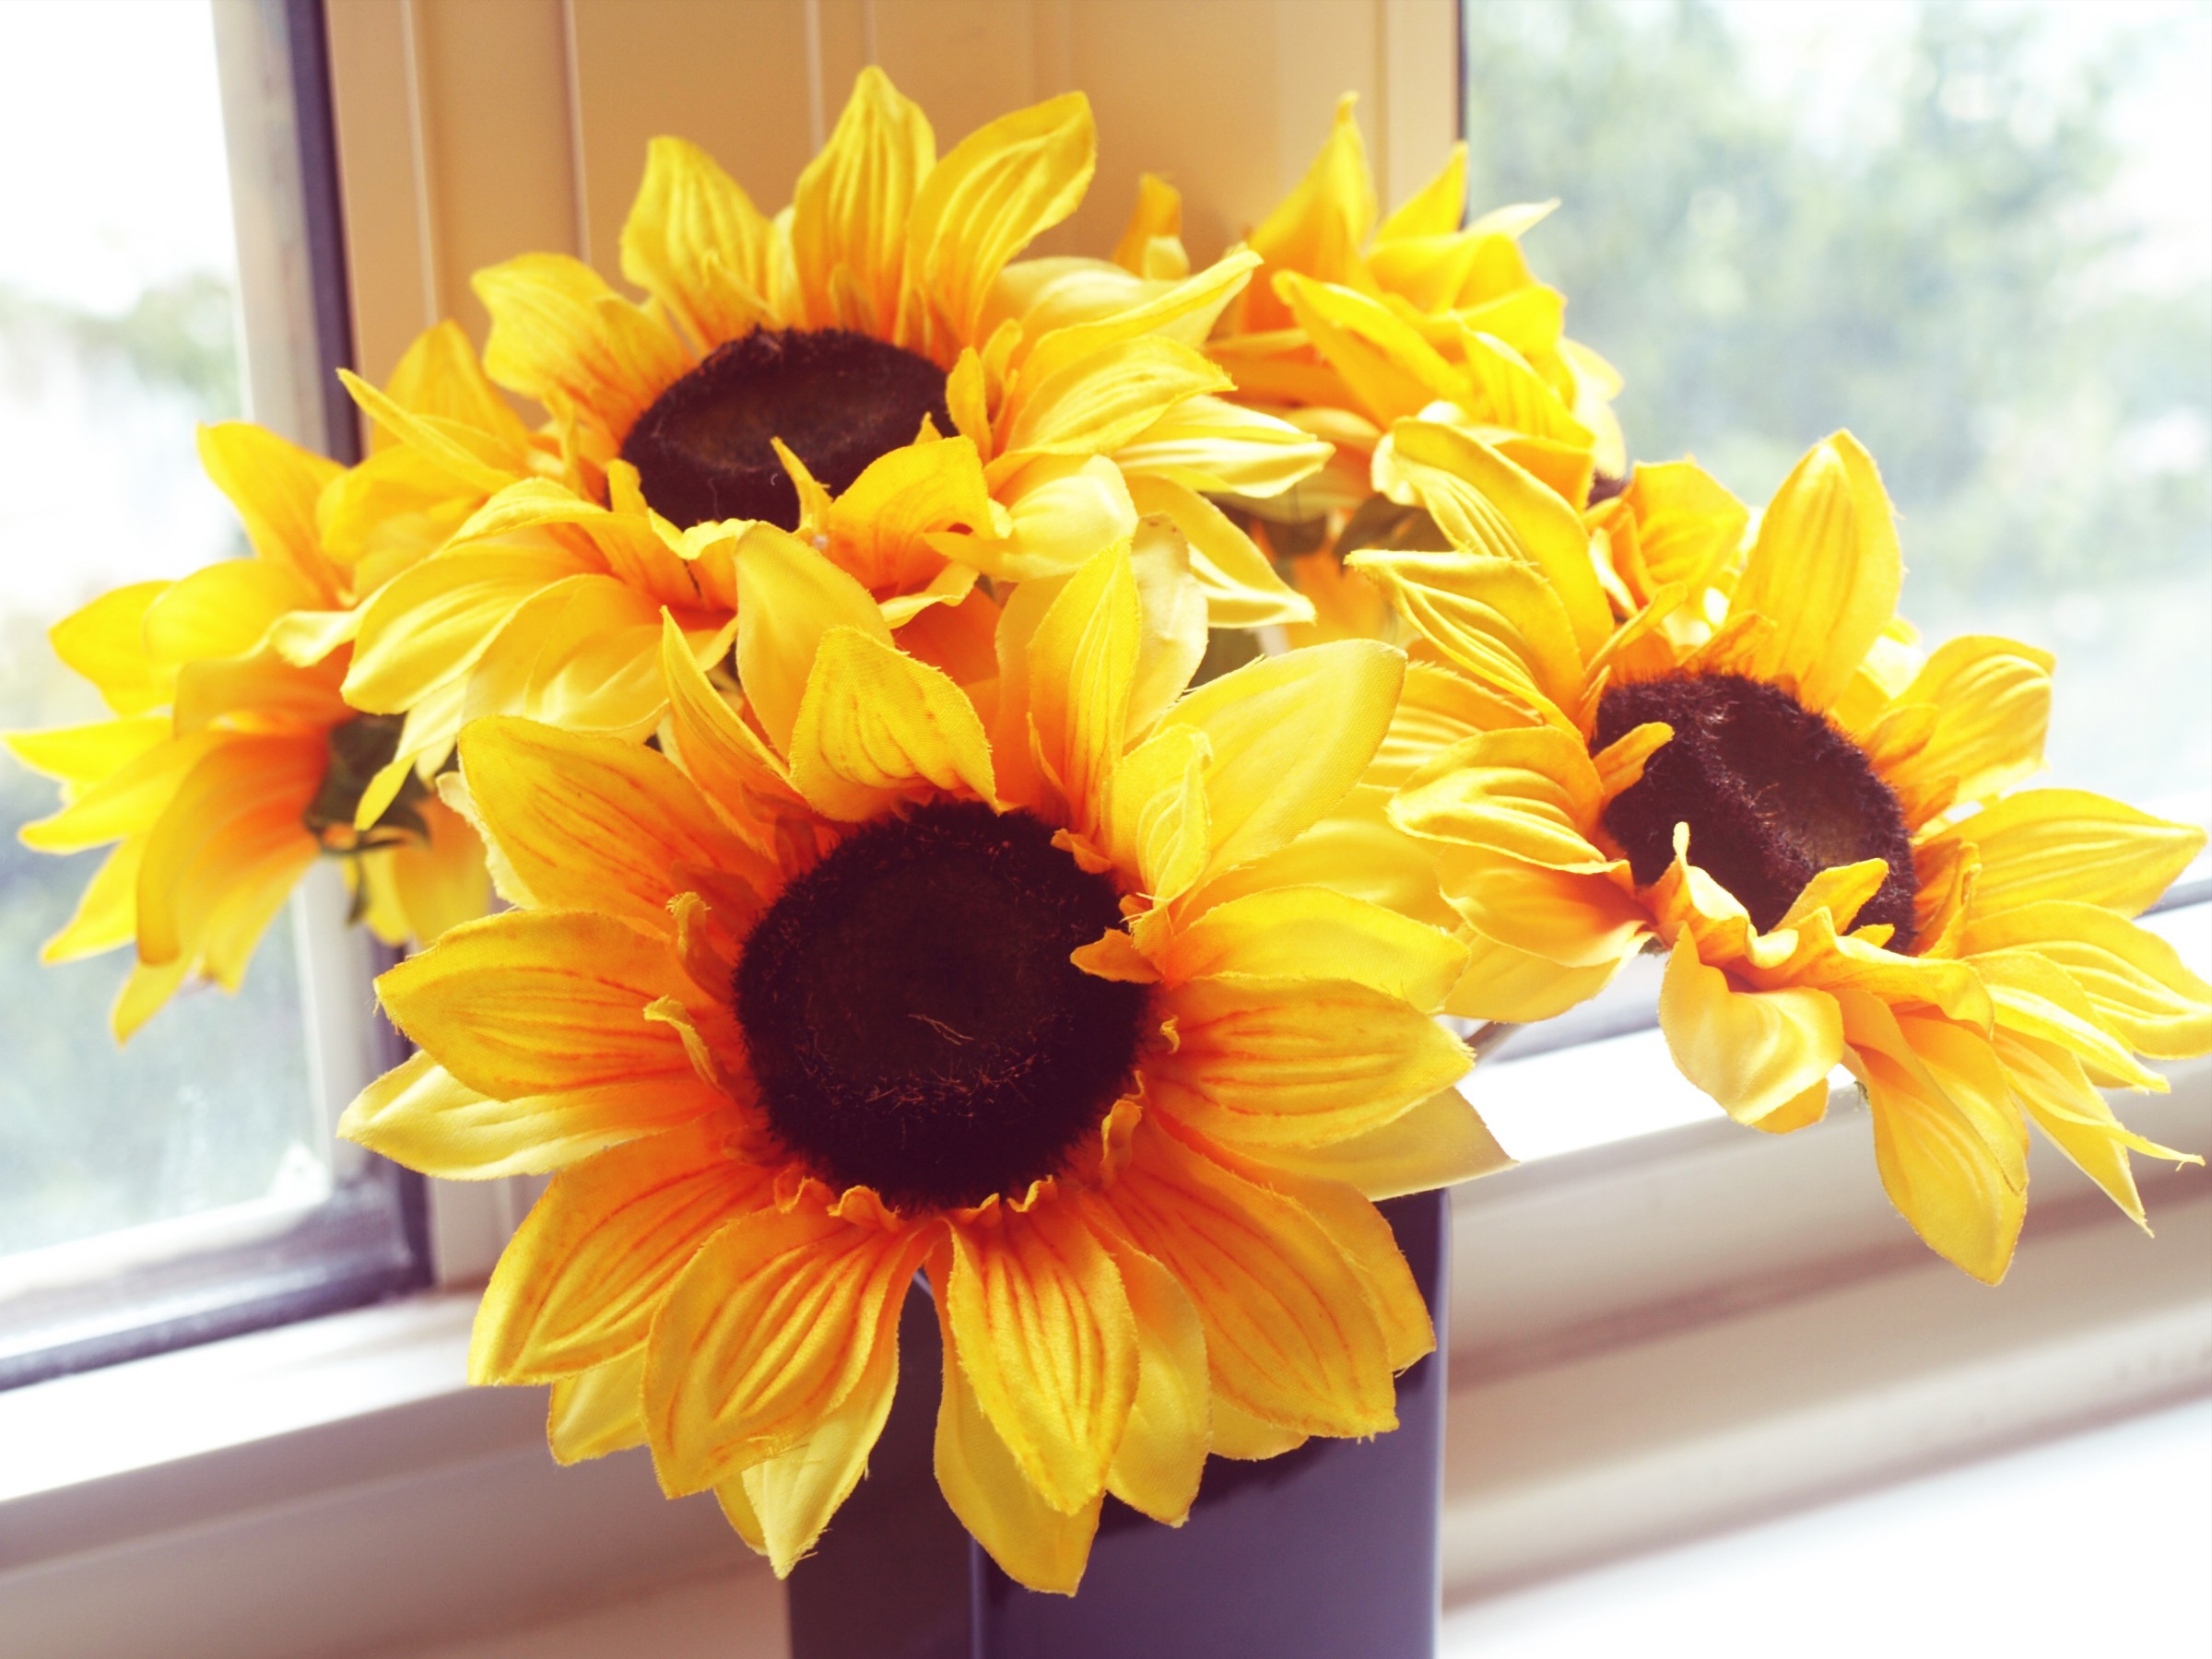 Original - sunflowers